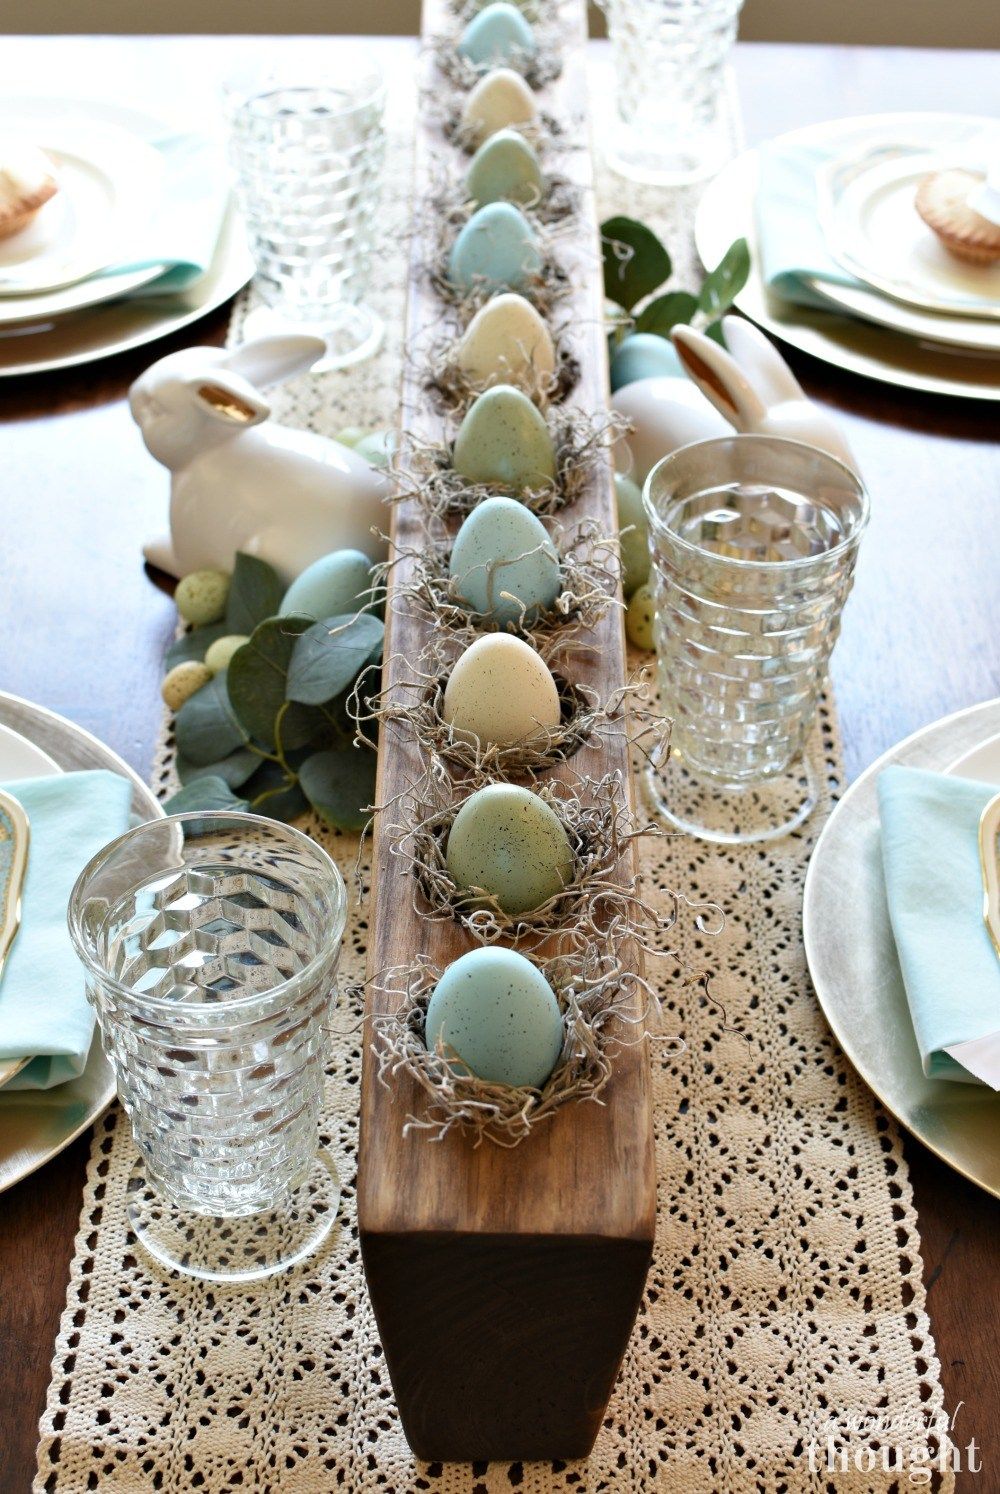 Home Decor for Easter Colorful Easter Eggs Table Runner